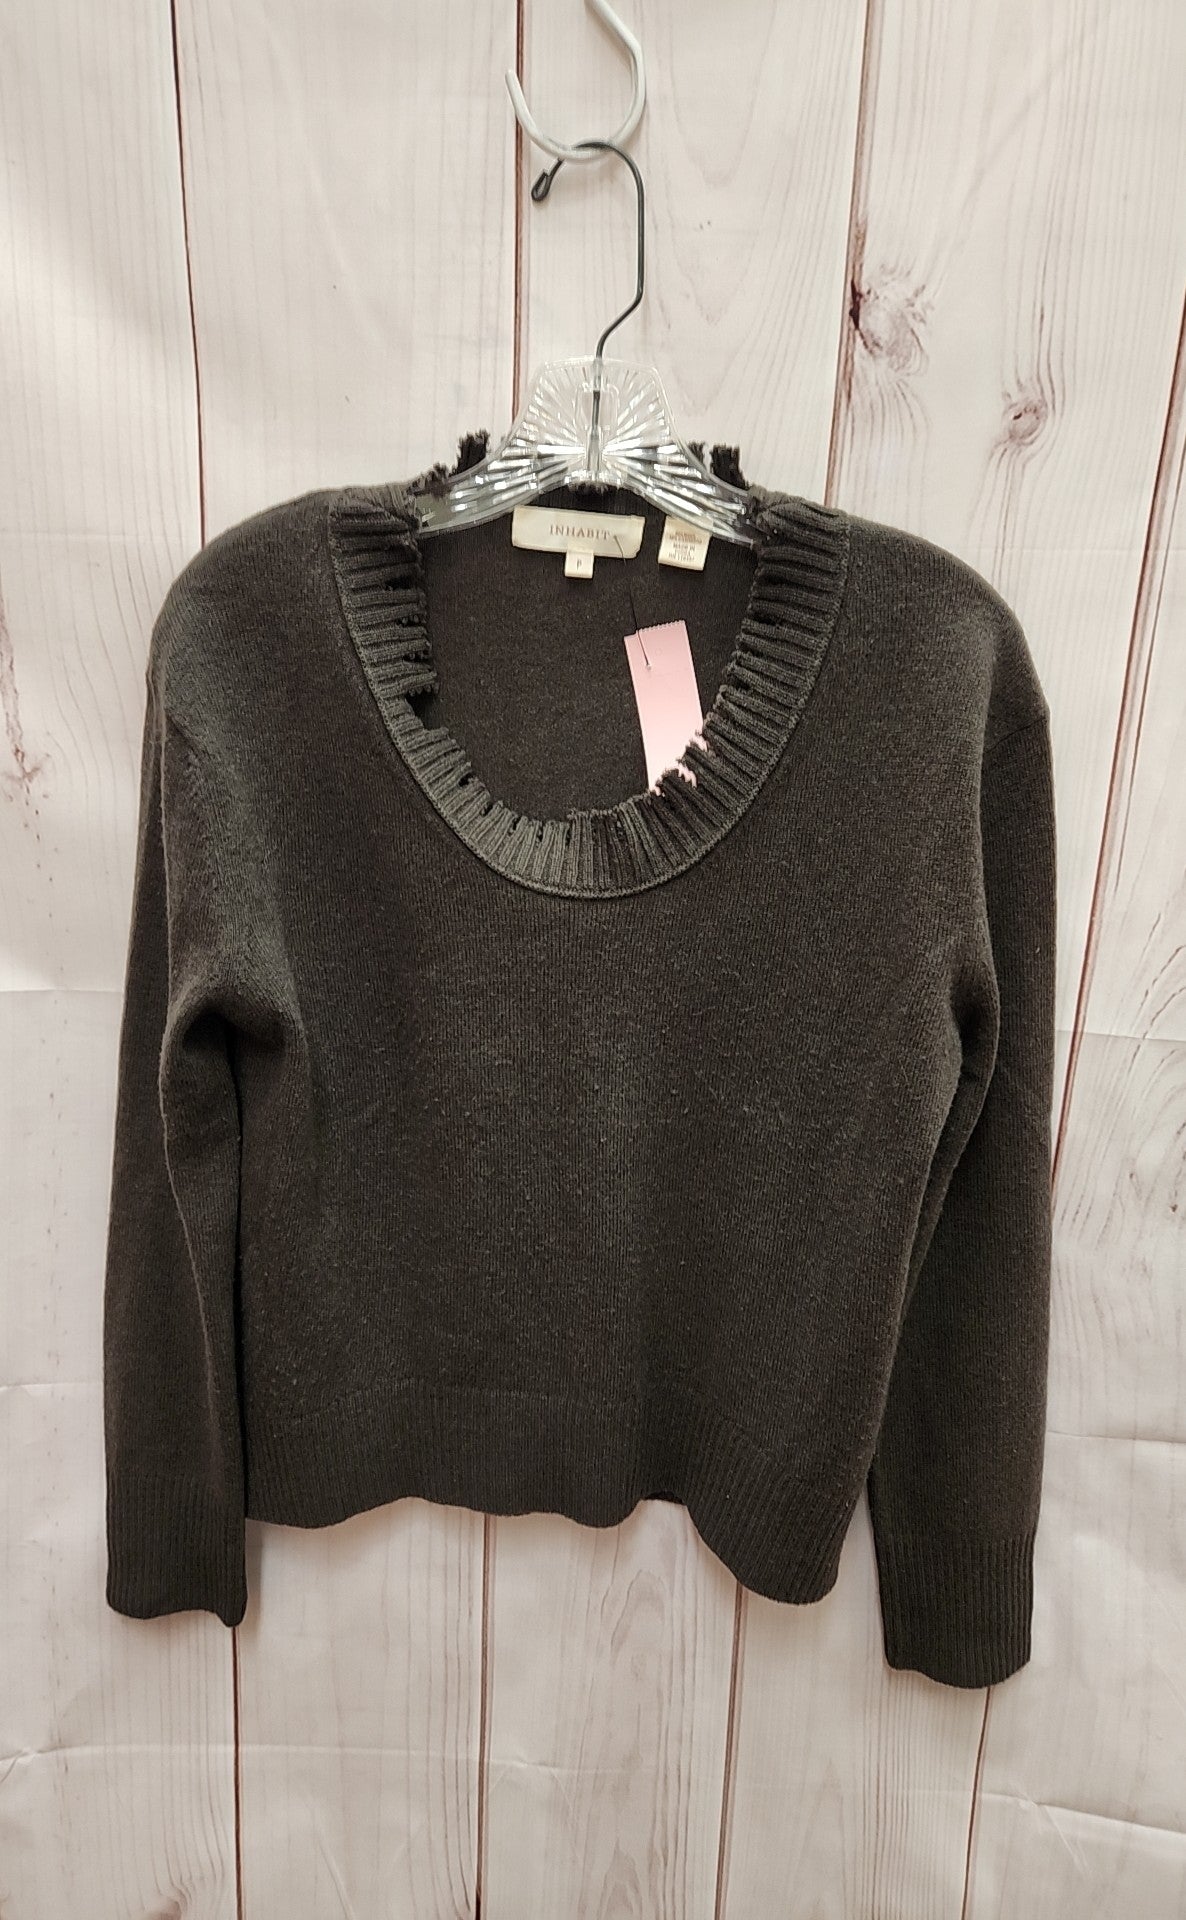 Inhabit Women's Size Petite Brown Sweater